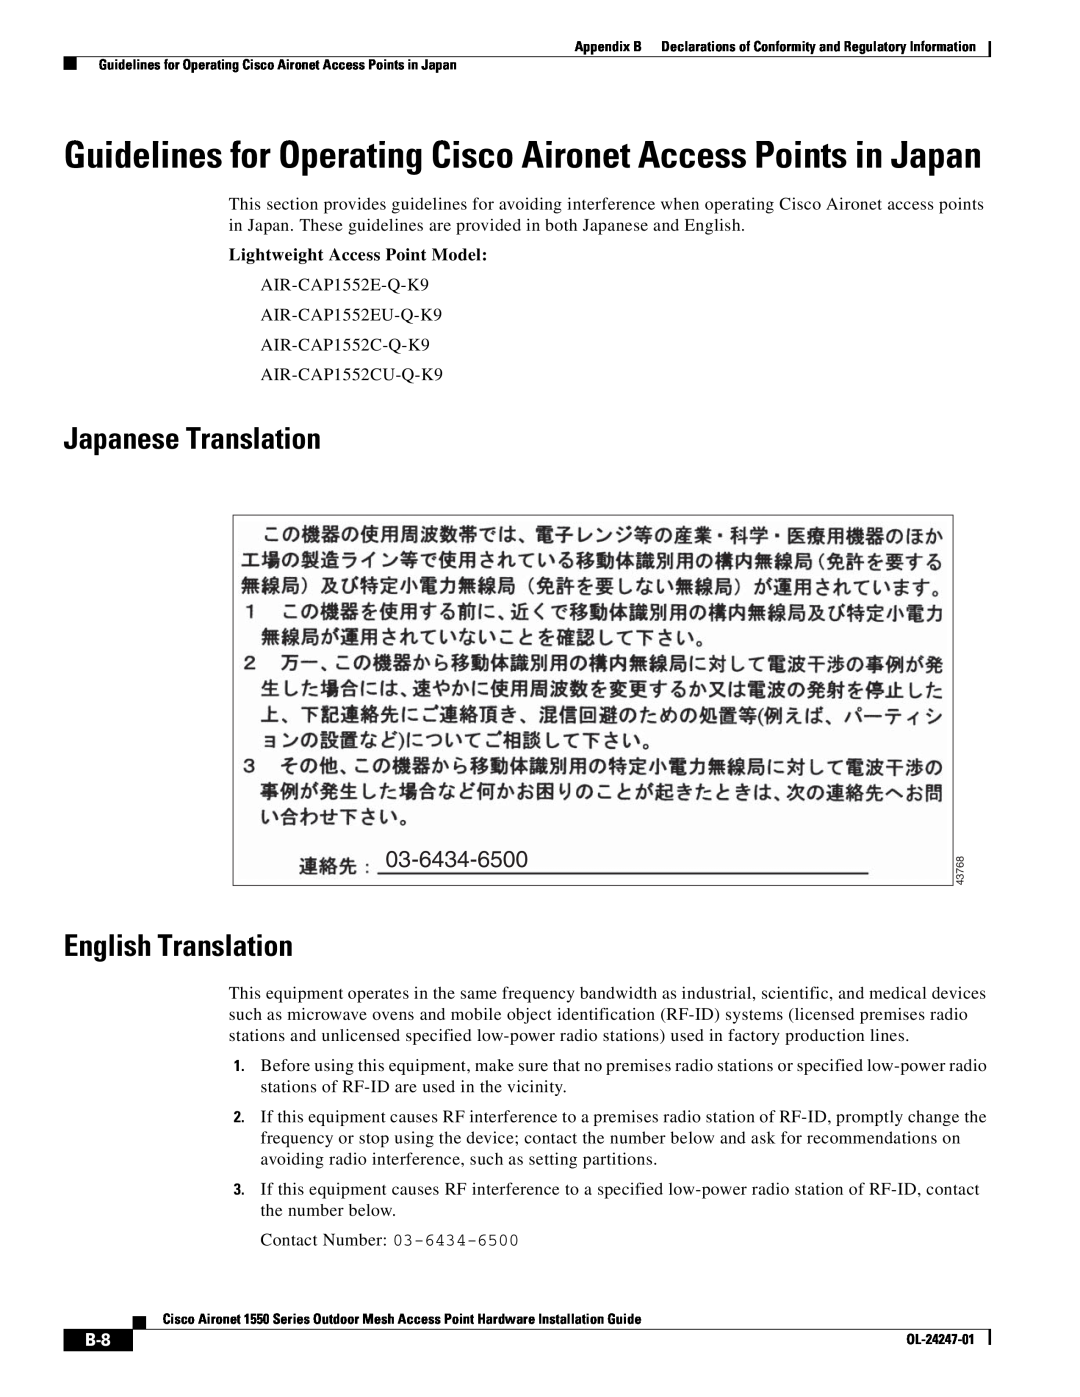 Cisco Systems AIRCAP1552EAK9RF Japanese Translation, English Translation, Lightweight Access Point Model, 03-6434-6500 